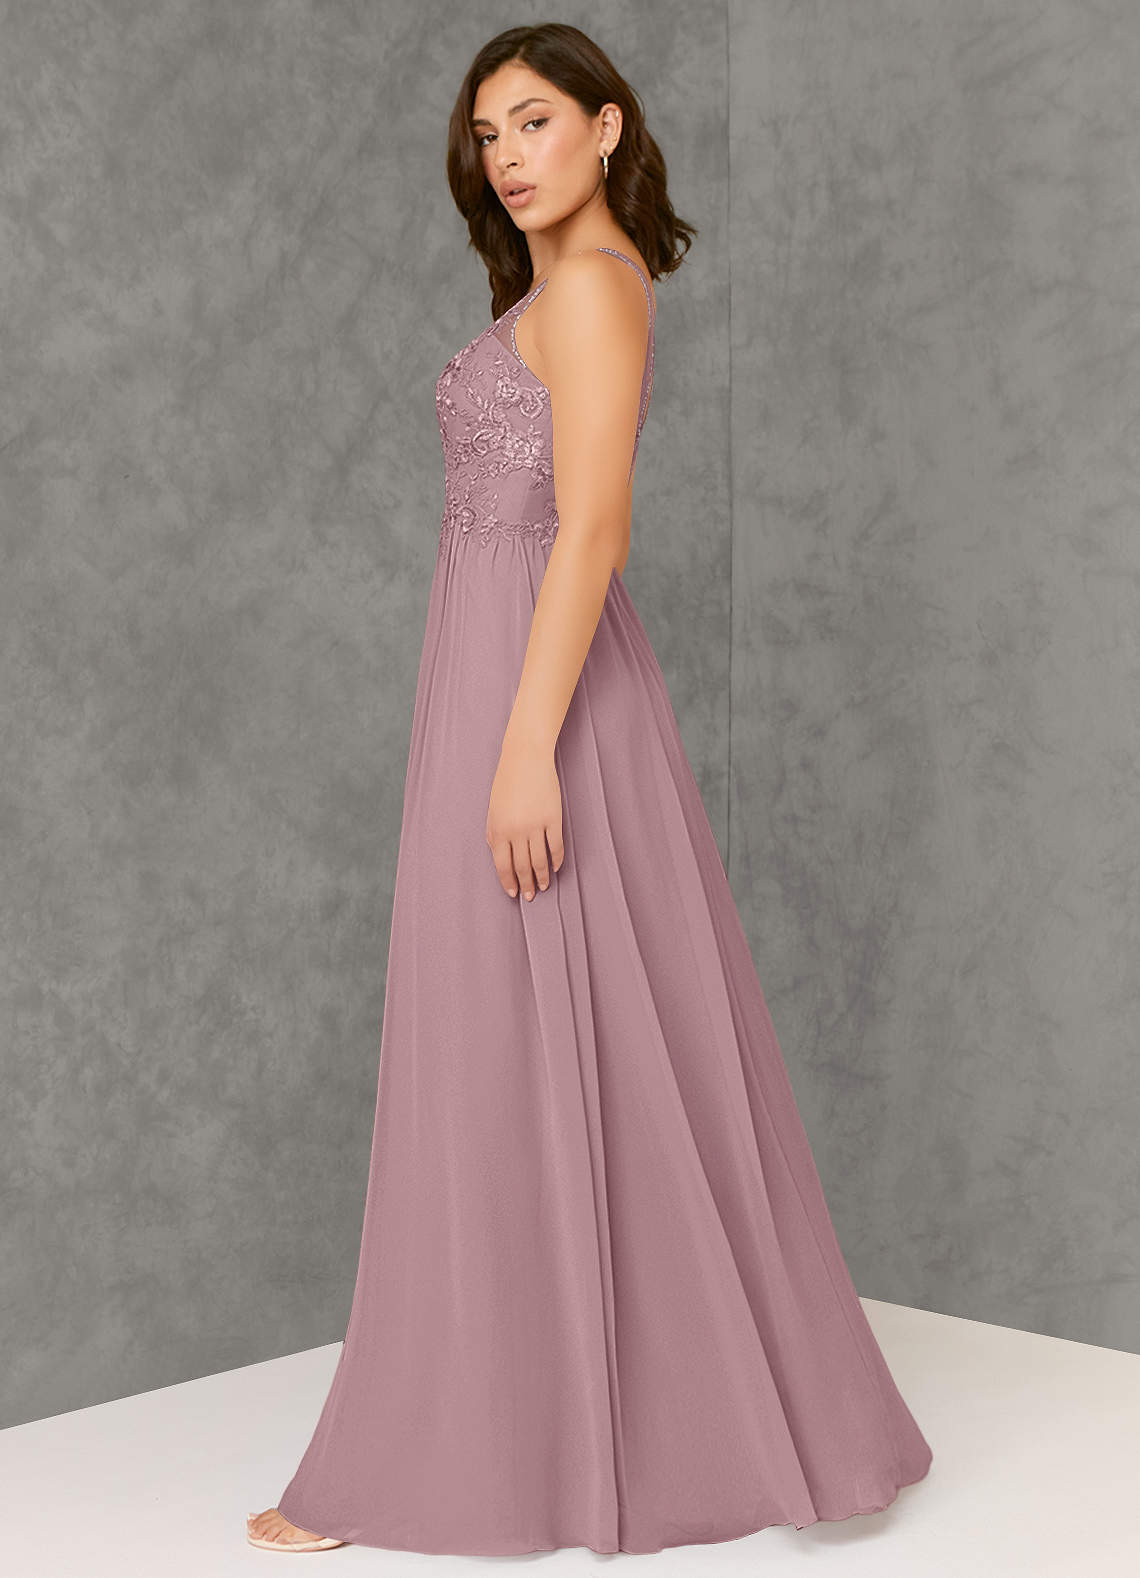 Azazie Amy Bridesmaid Dresses A-Line Lace Chiffon Floor-Length Dress image1